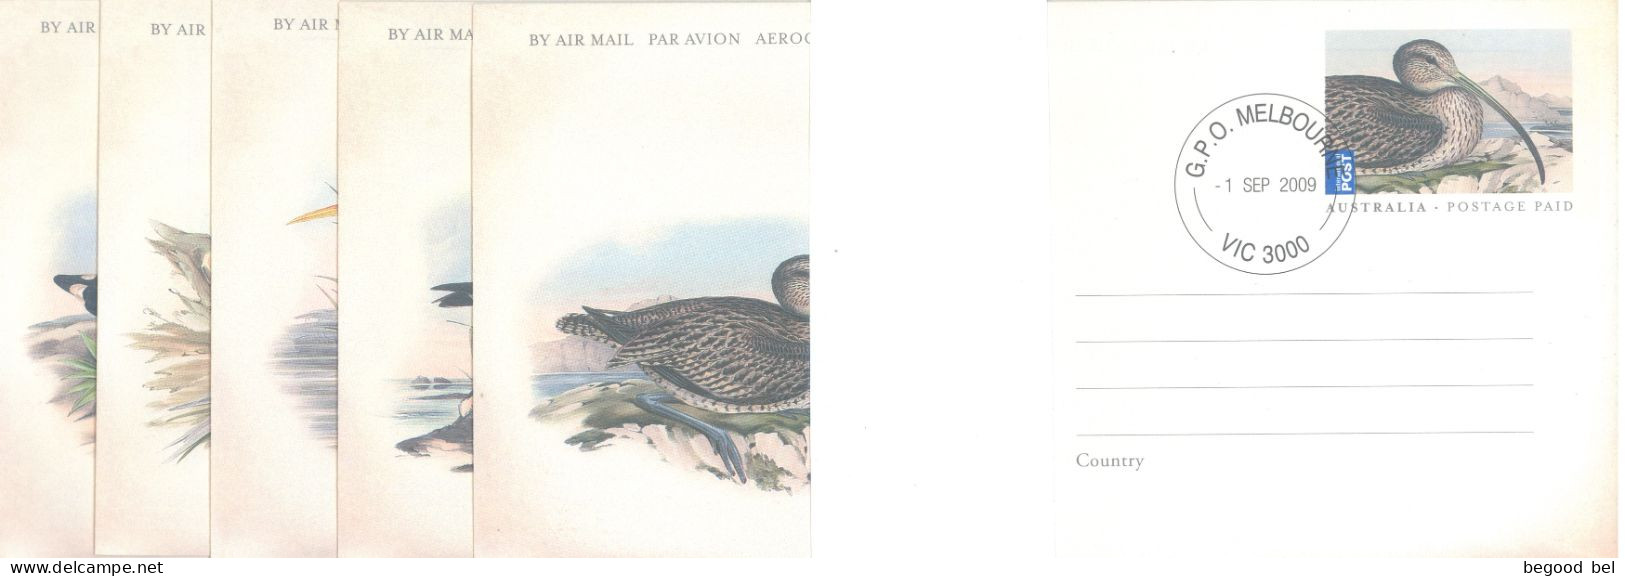 AUSTRALIA - AEROGRAMME COMPLETE SET OF 5  - FDC 1.9.2009 - MIGRATING BIRDS -  Lot 25753 - Aérogrammes